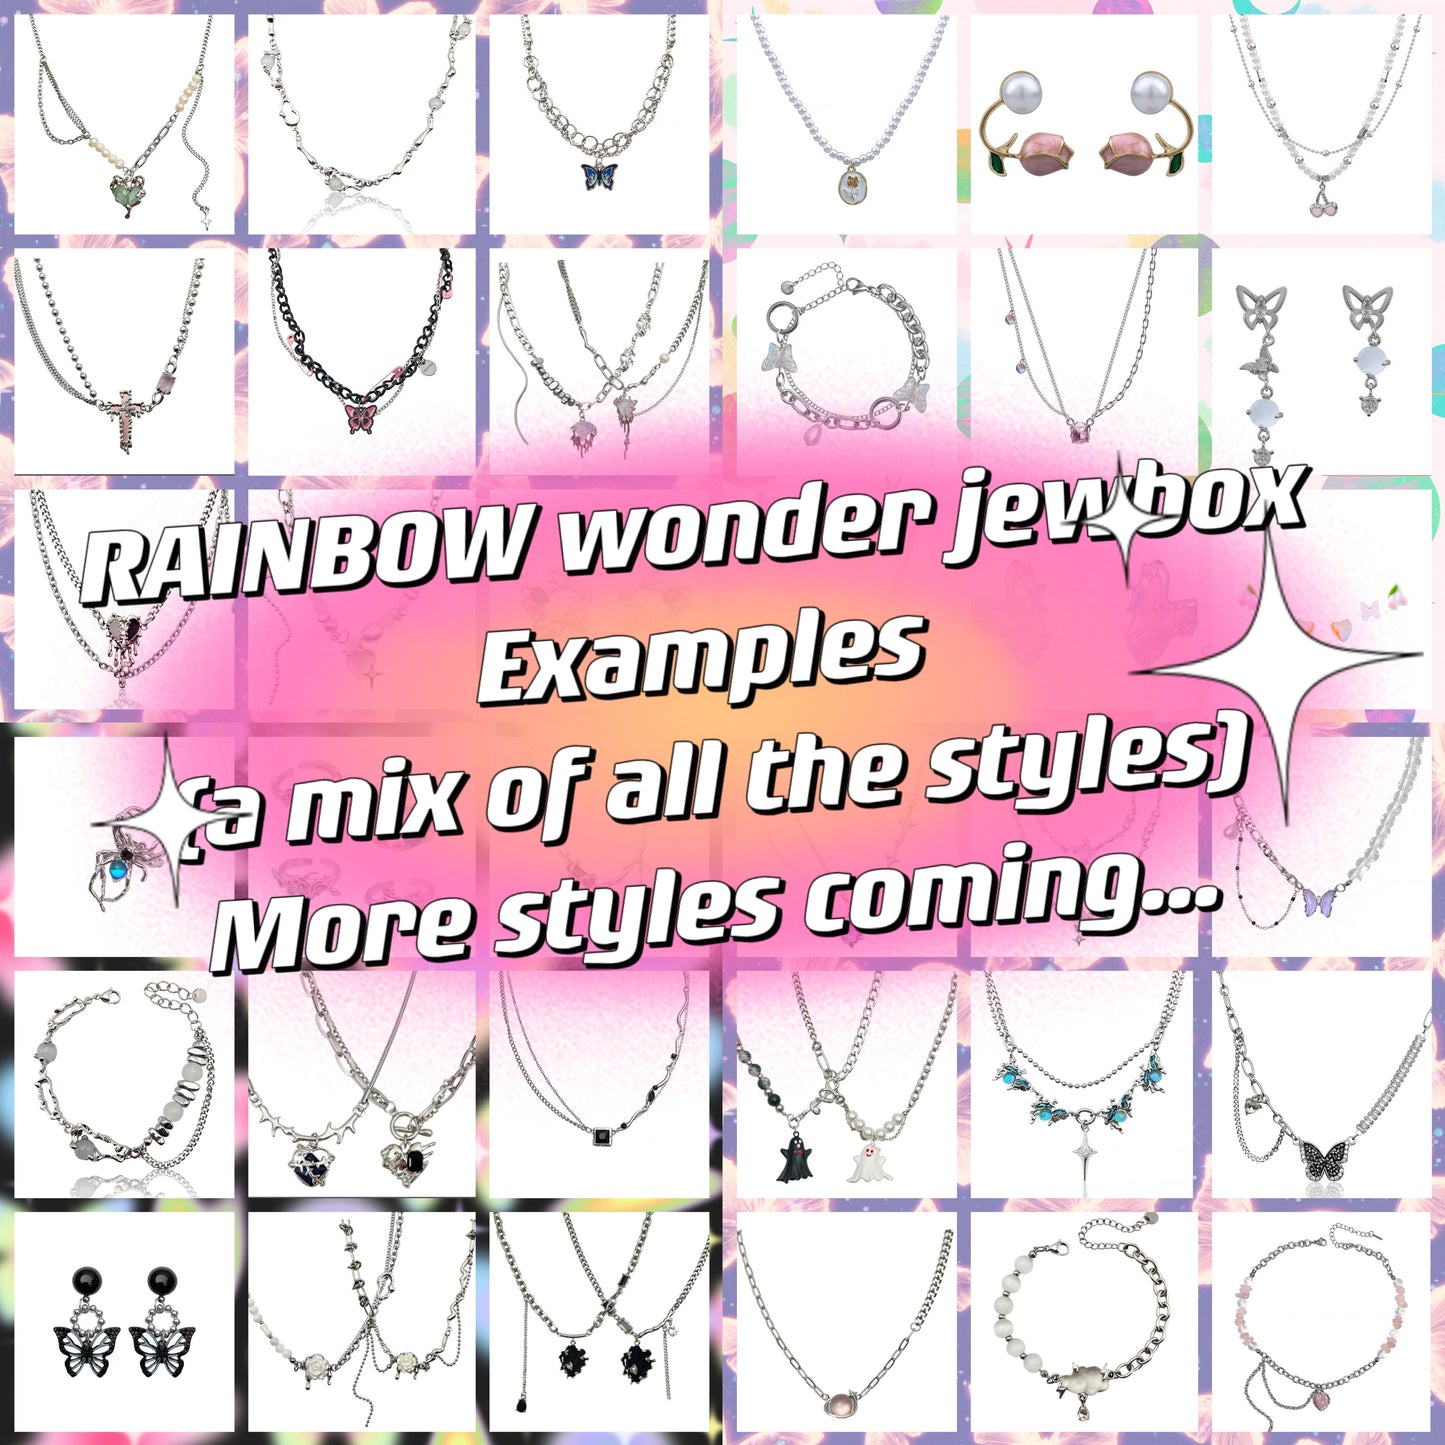 Wonder Jewbox - neverland accessories